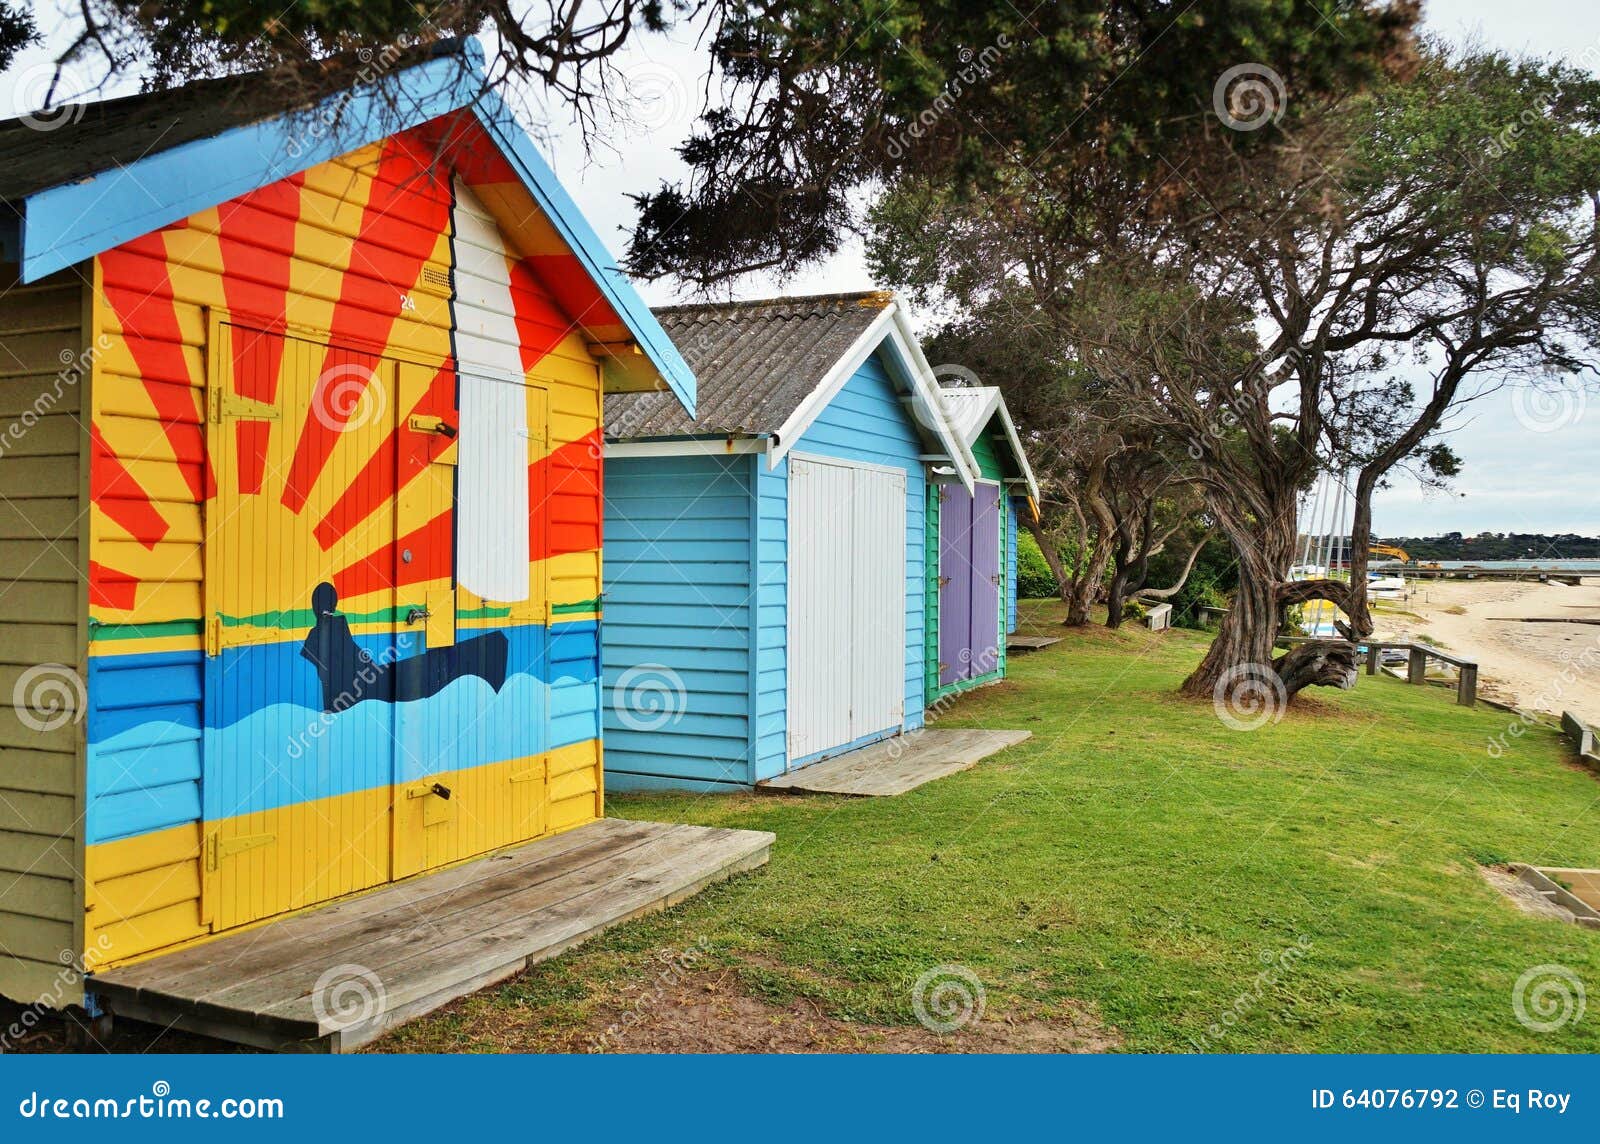 Colorful Beach Cabins In The Mornington Peninsula In Australia